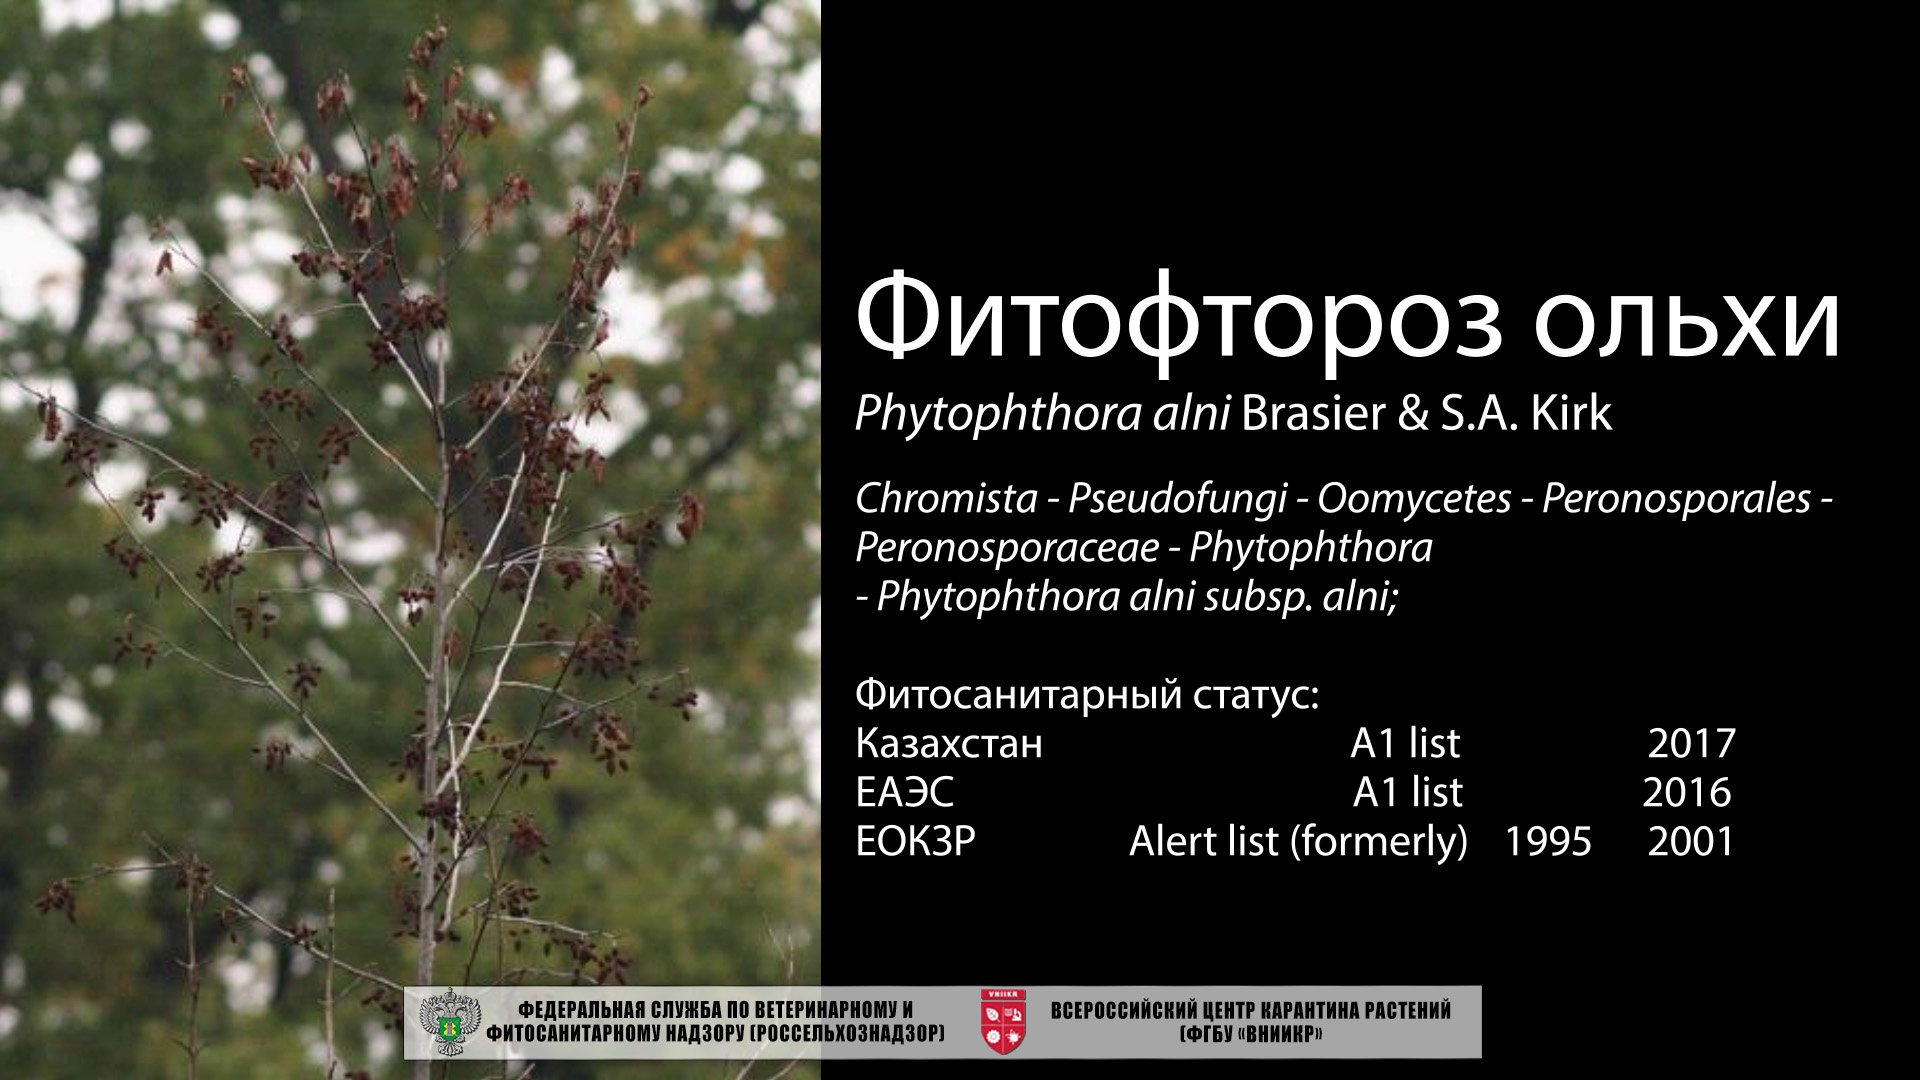 Фитофтороз ольхи (Phytophthora alni Brasier & S.A. Kirk)